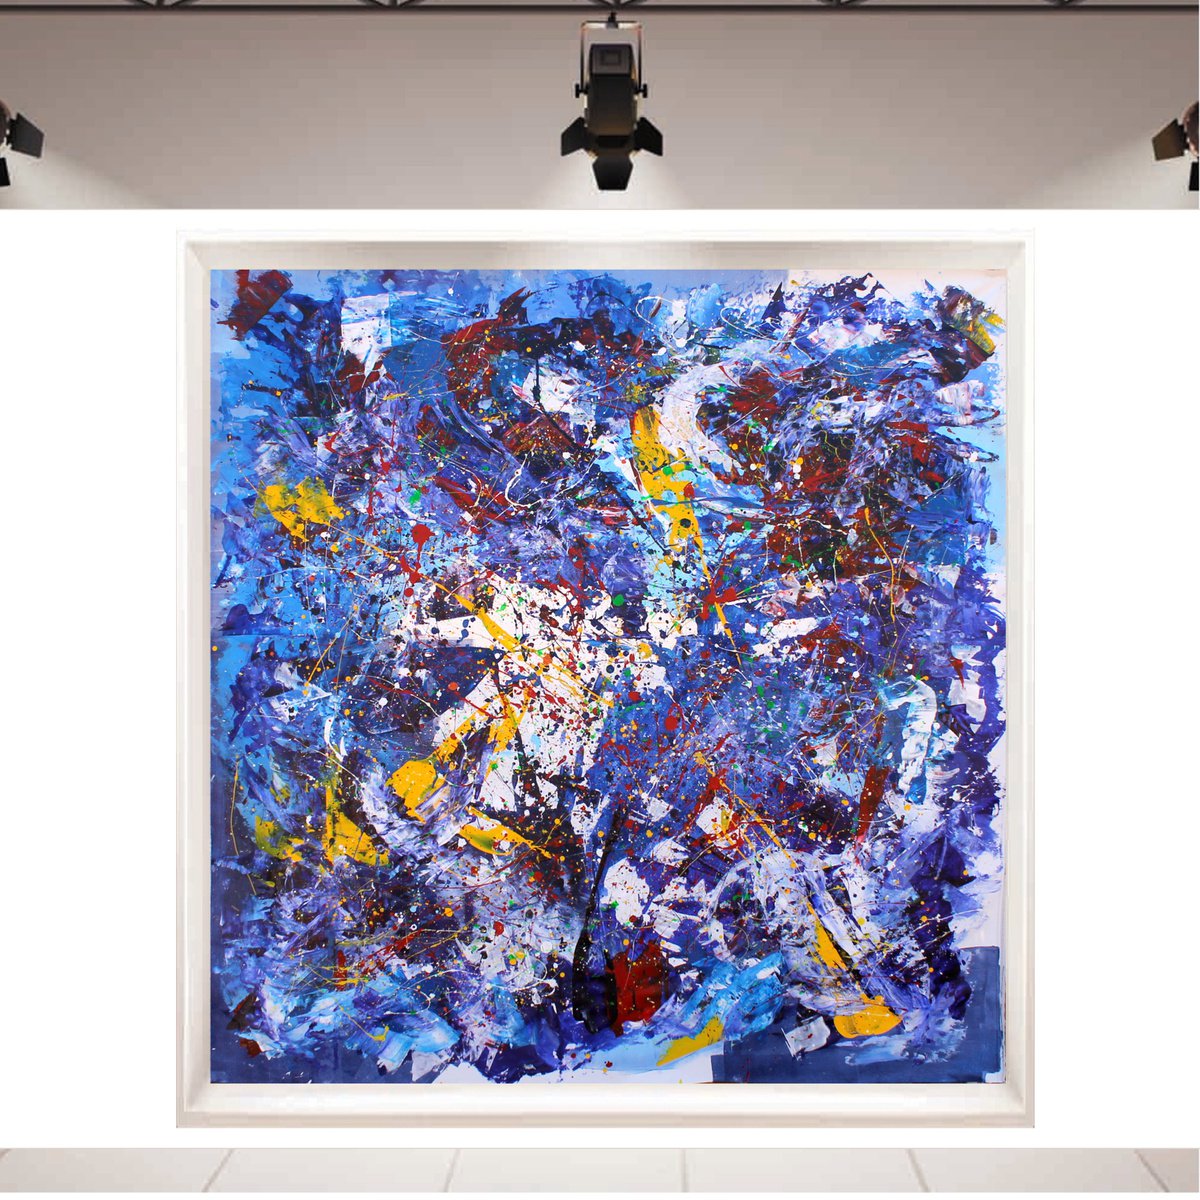 Abstract Woman of Colors Emotions - XXL painting oversize by Juan Jose Garay by Juan Jose Garay